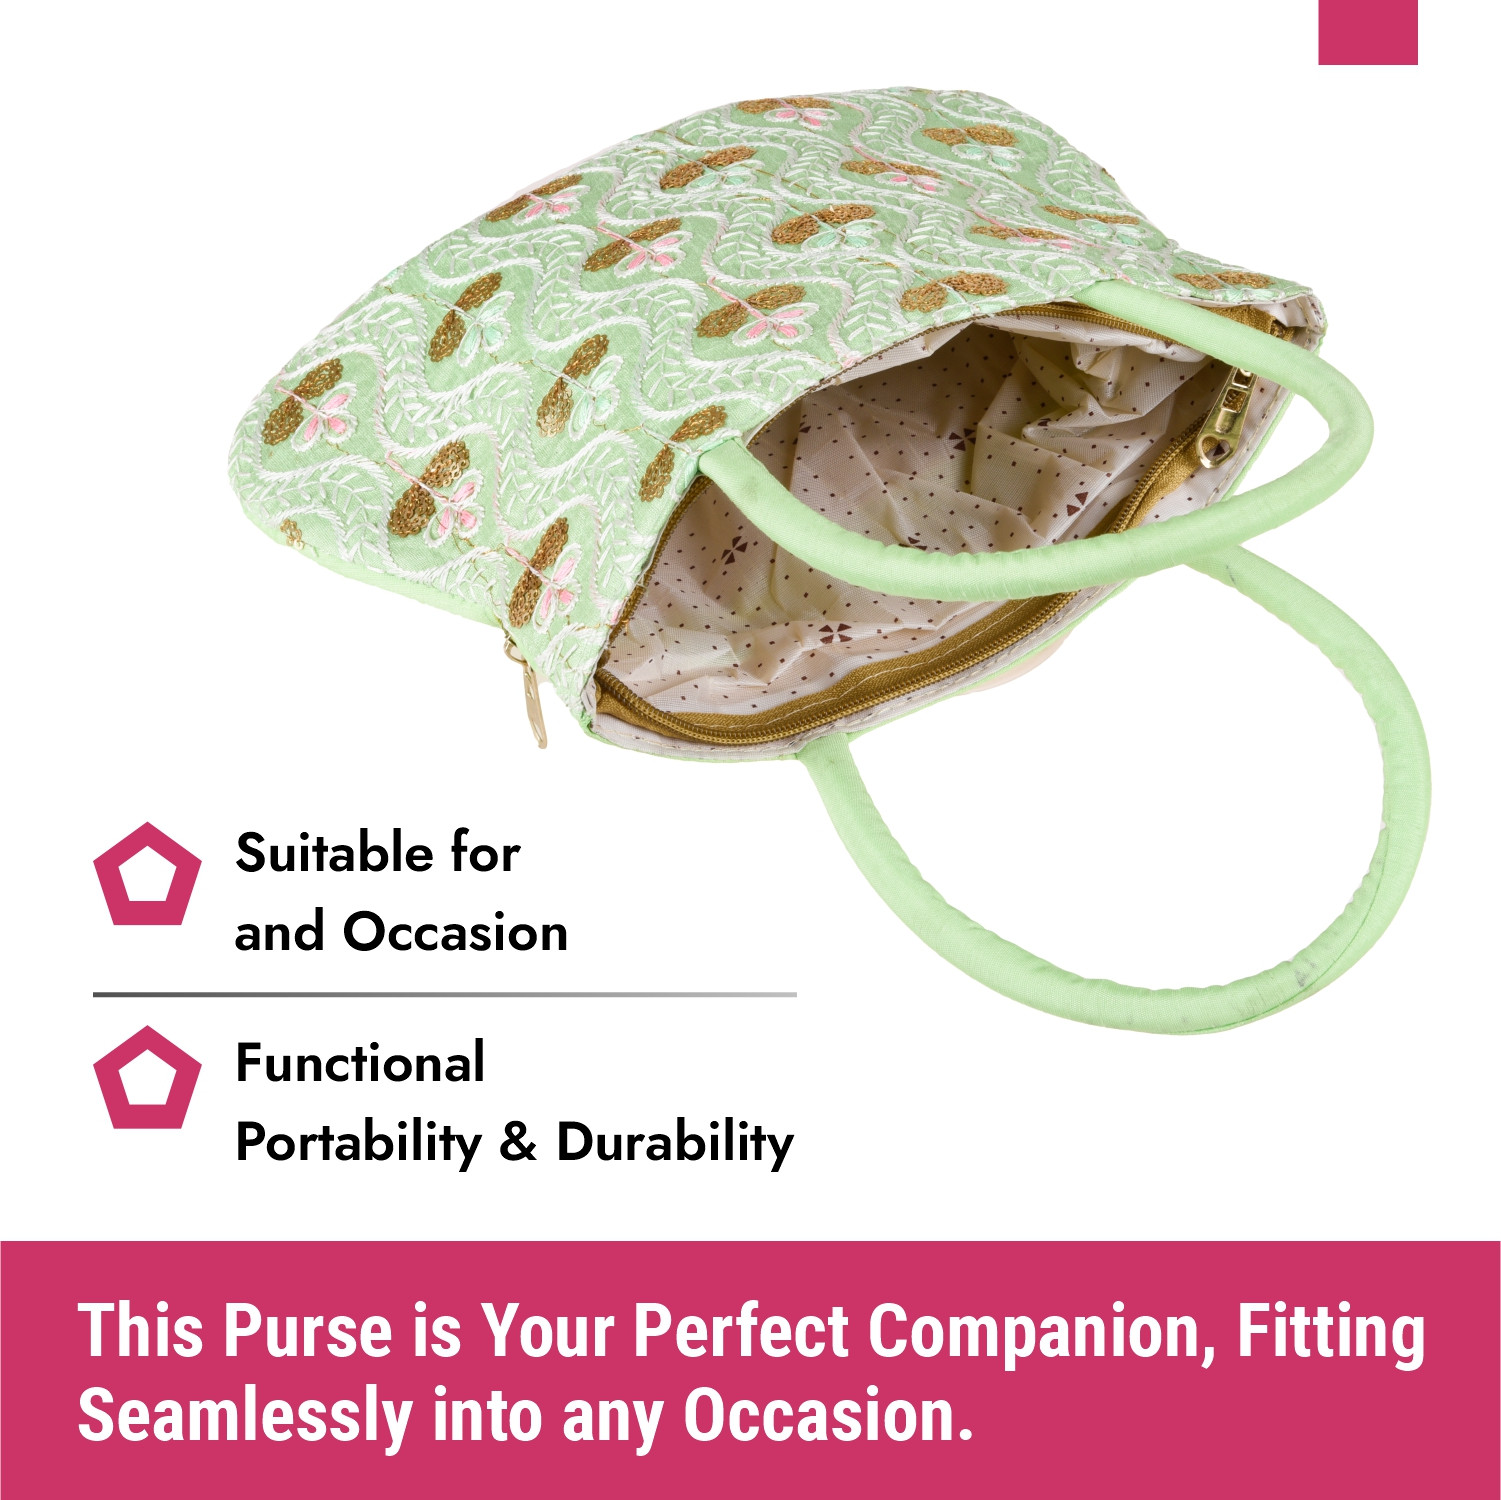 Kuber Industries Hand Bag | Traditional Hand Bag | Silk Wallet Hand Bag | Woman Tote Hand Bag | Ladies Purse Handbag | Gifts Hand Bag | Curved Shape Embroidery Hand Bag | Green